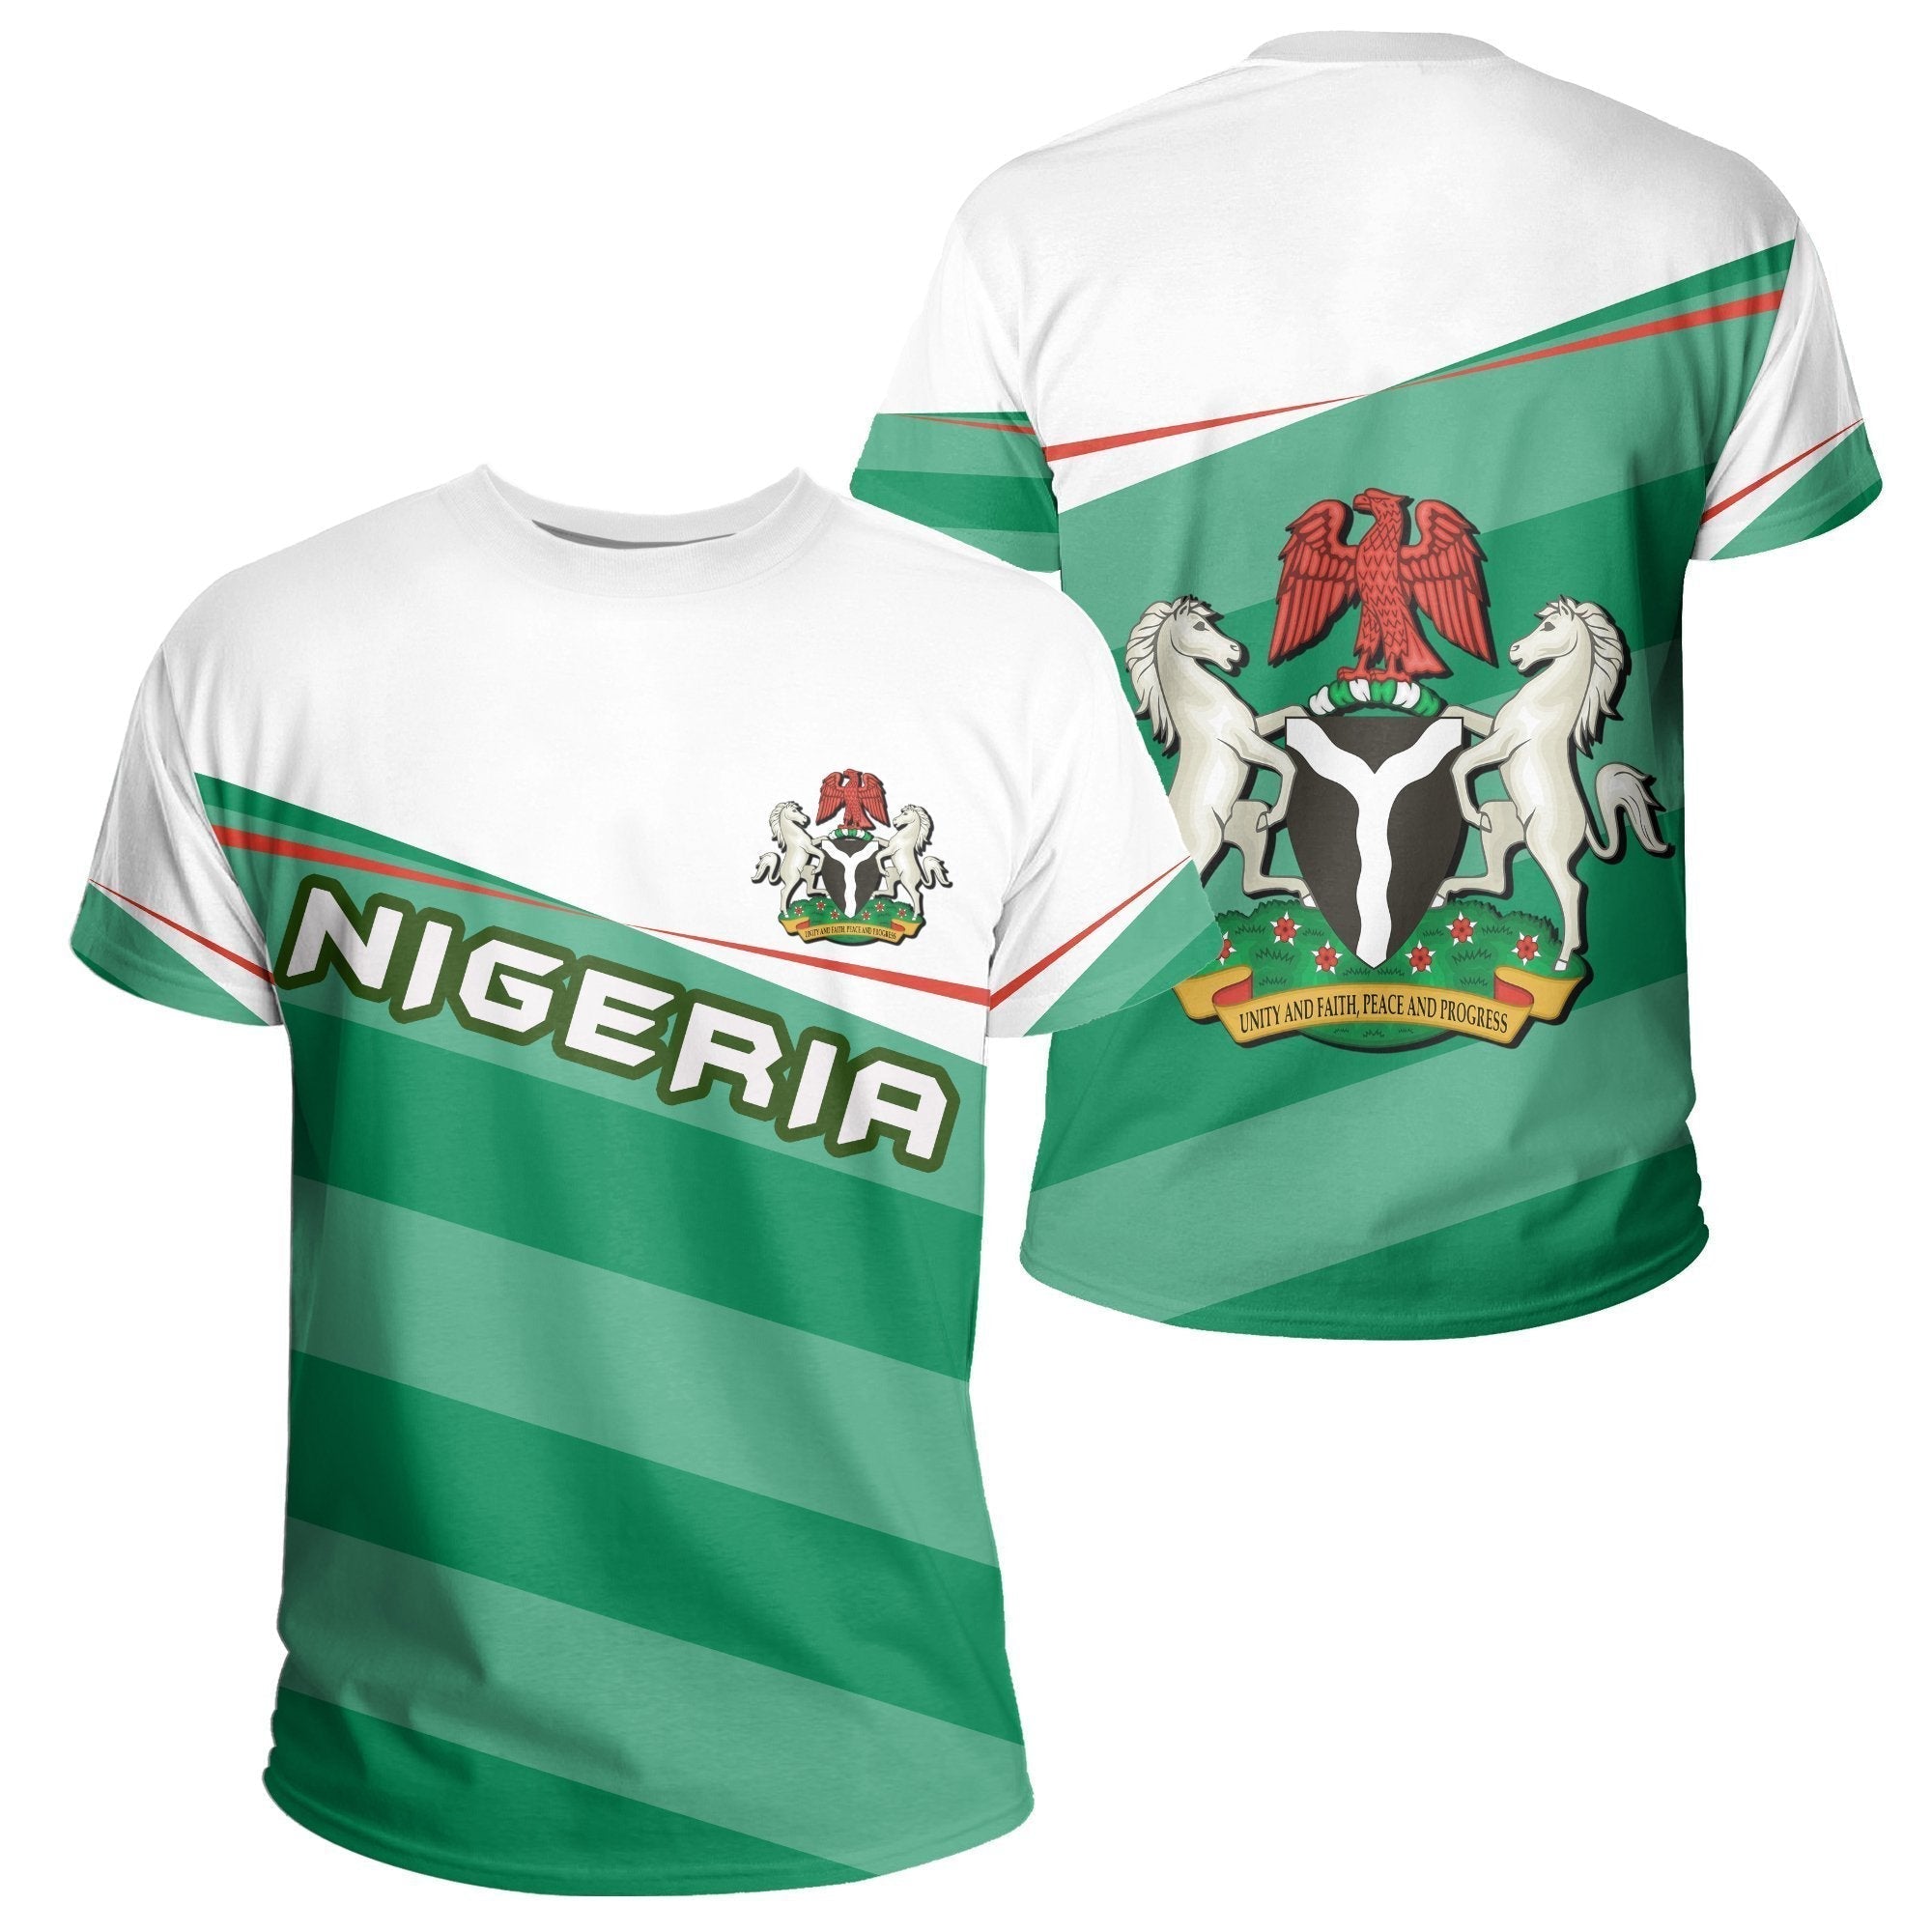 wonder-print-shop-t-shirt-nigeria-vivian-style-tee